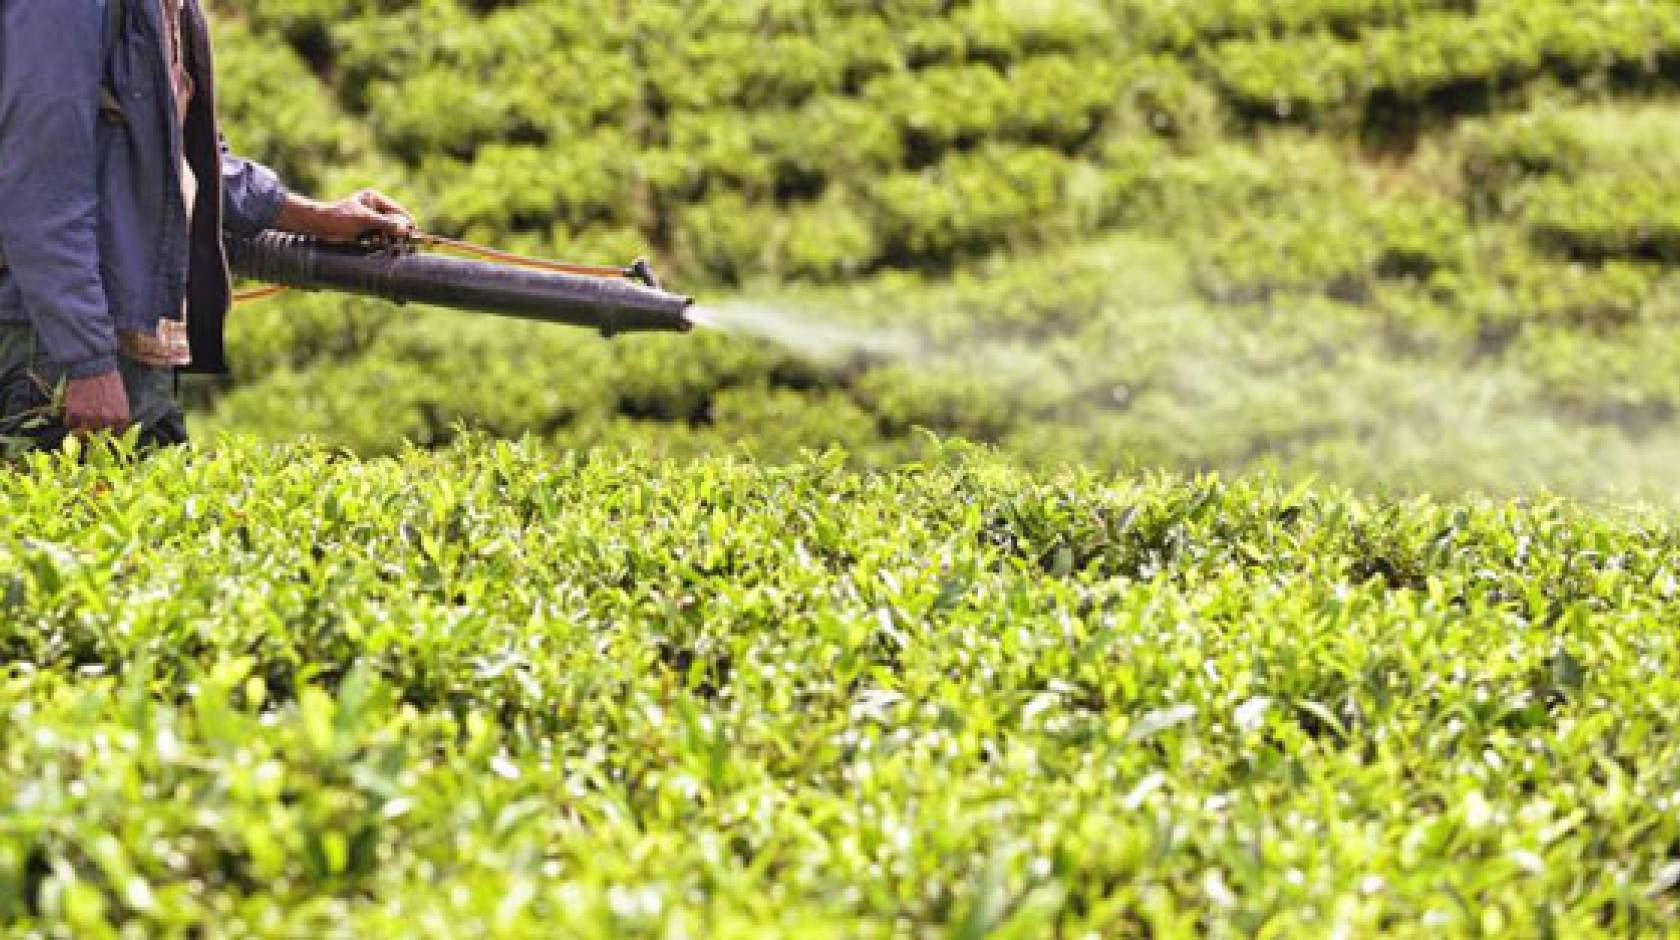 Pesticide sprayed on a field